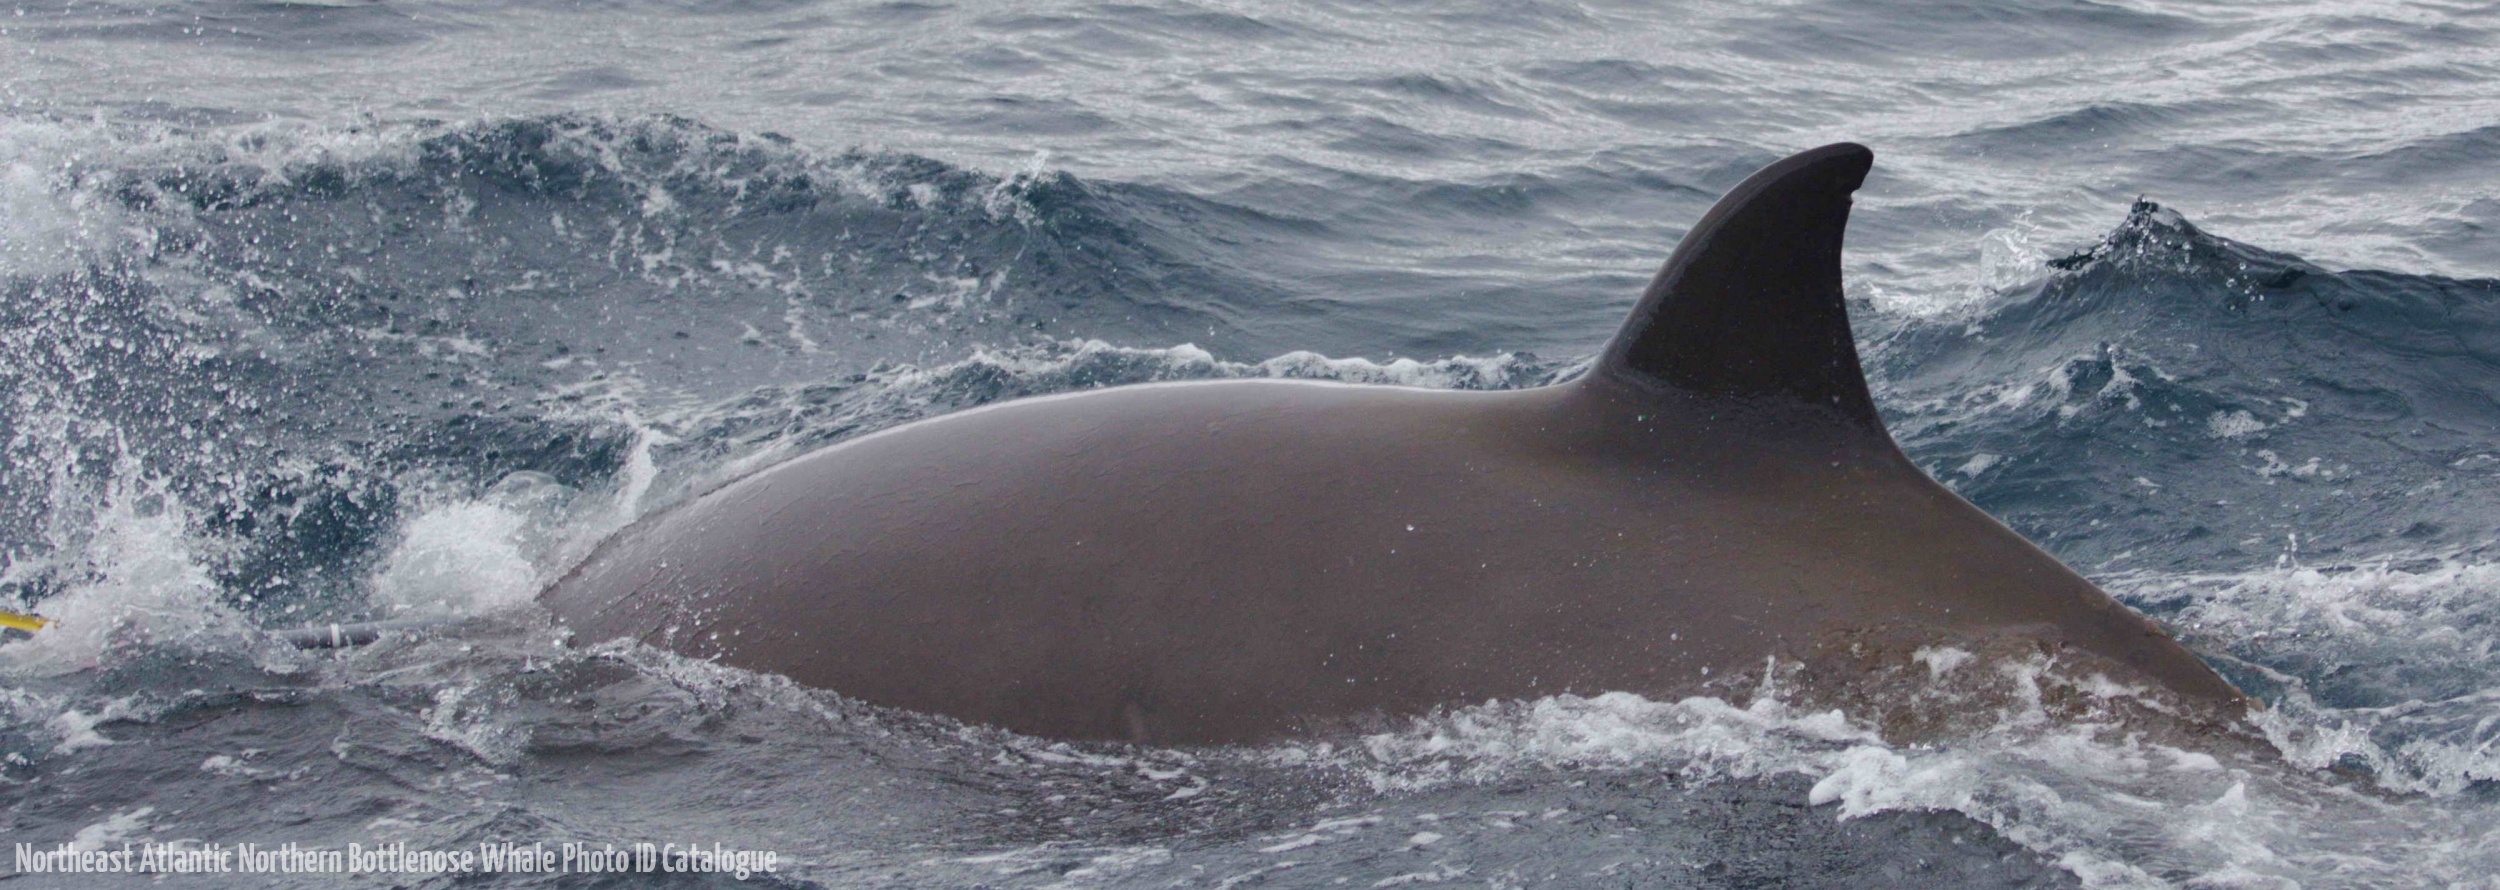 Whale ID: 0065,  Date taken: 24-06-2014,  Photographer: Lucia M. Martín López